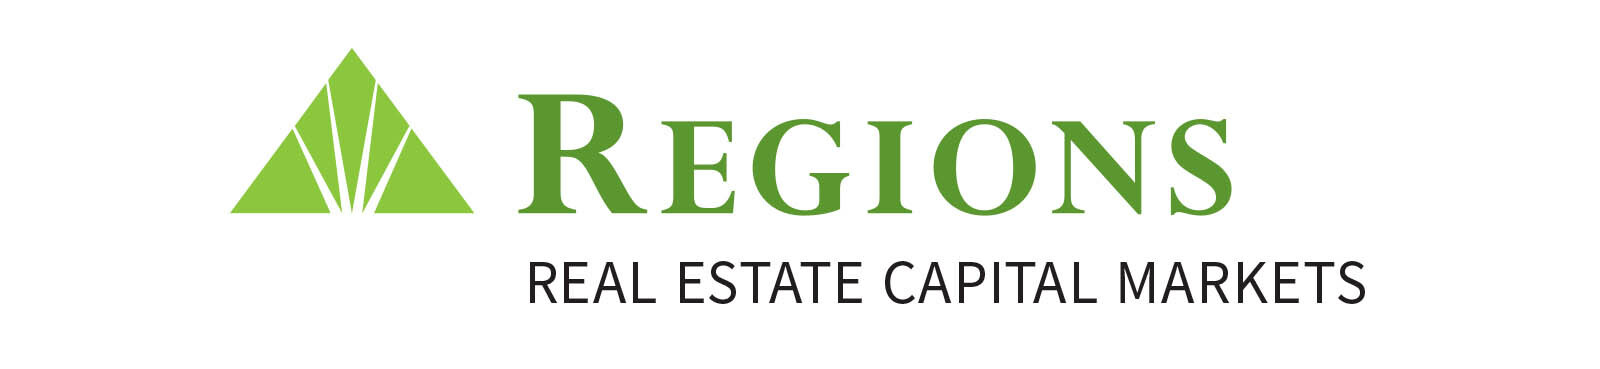 Regions Real Estate Capital Markets logo